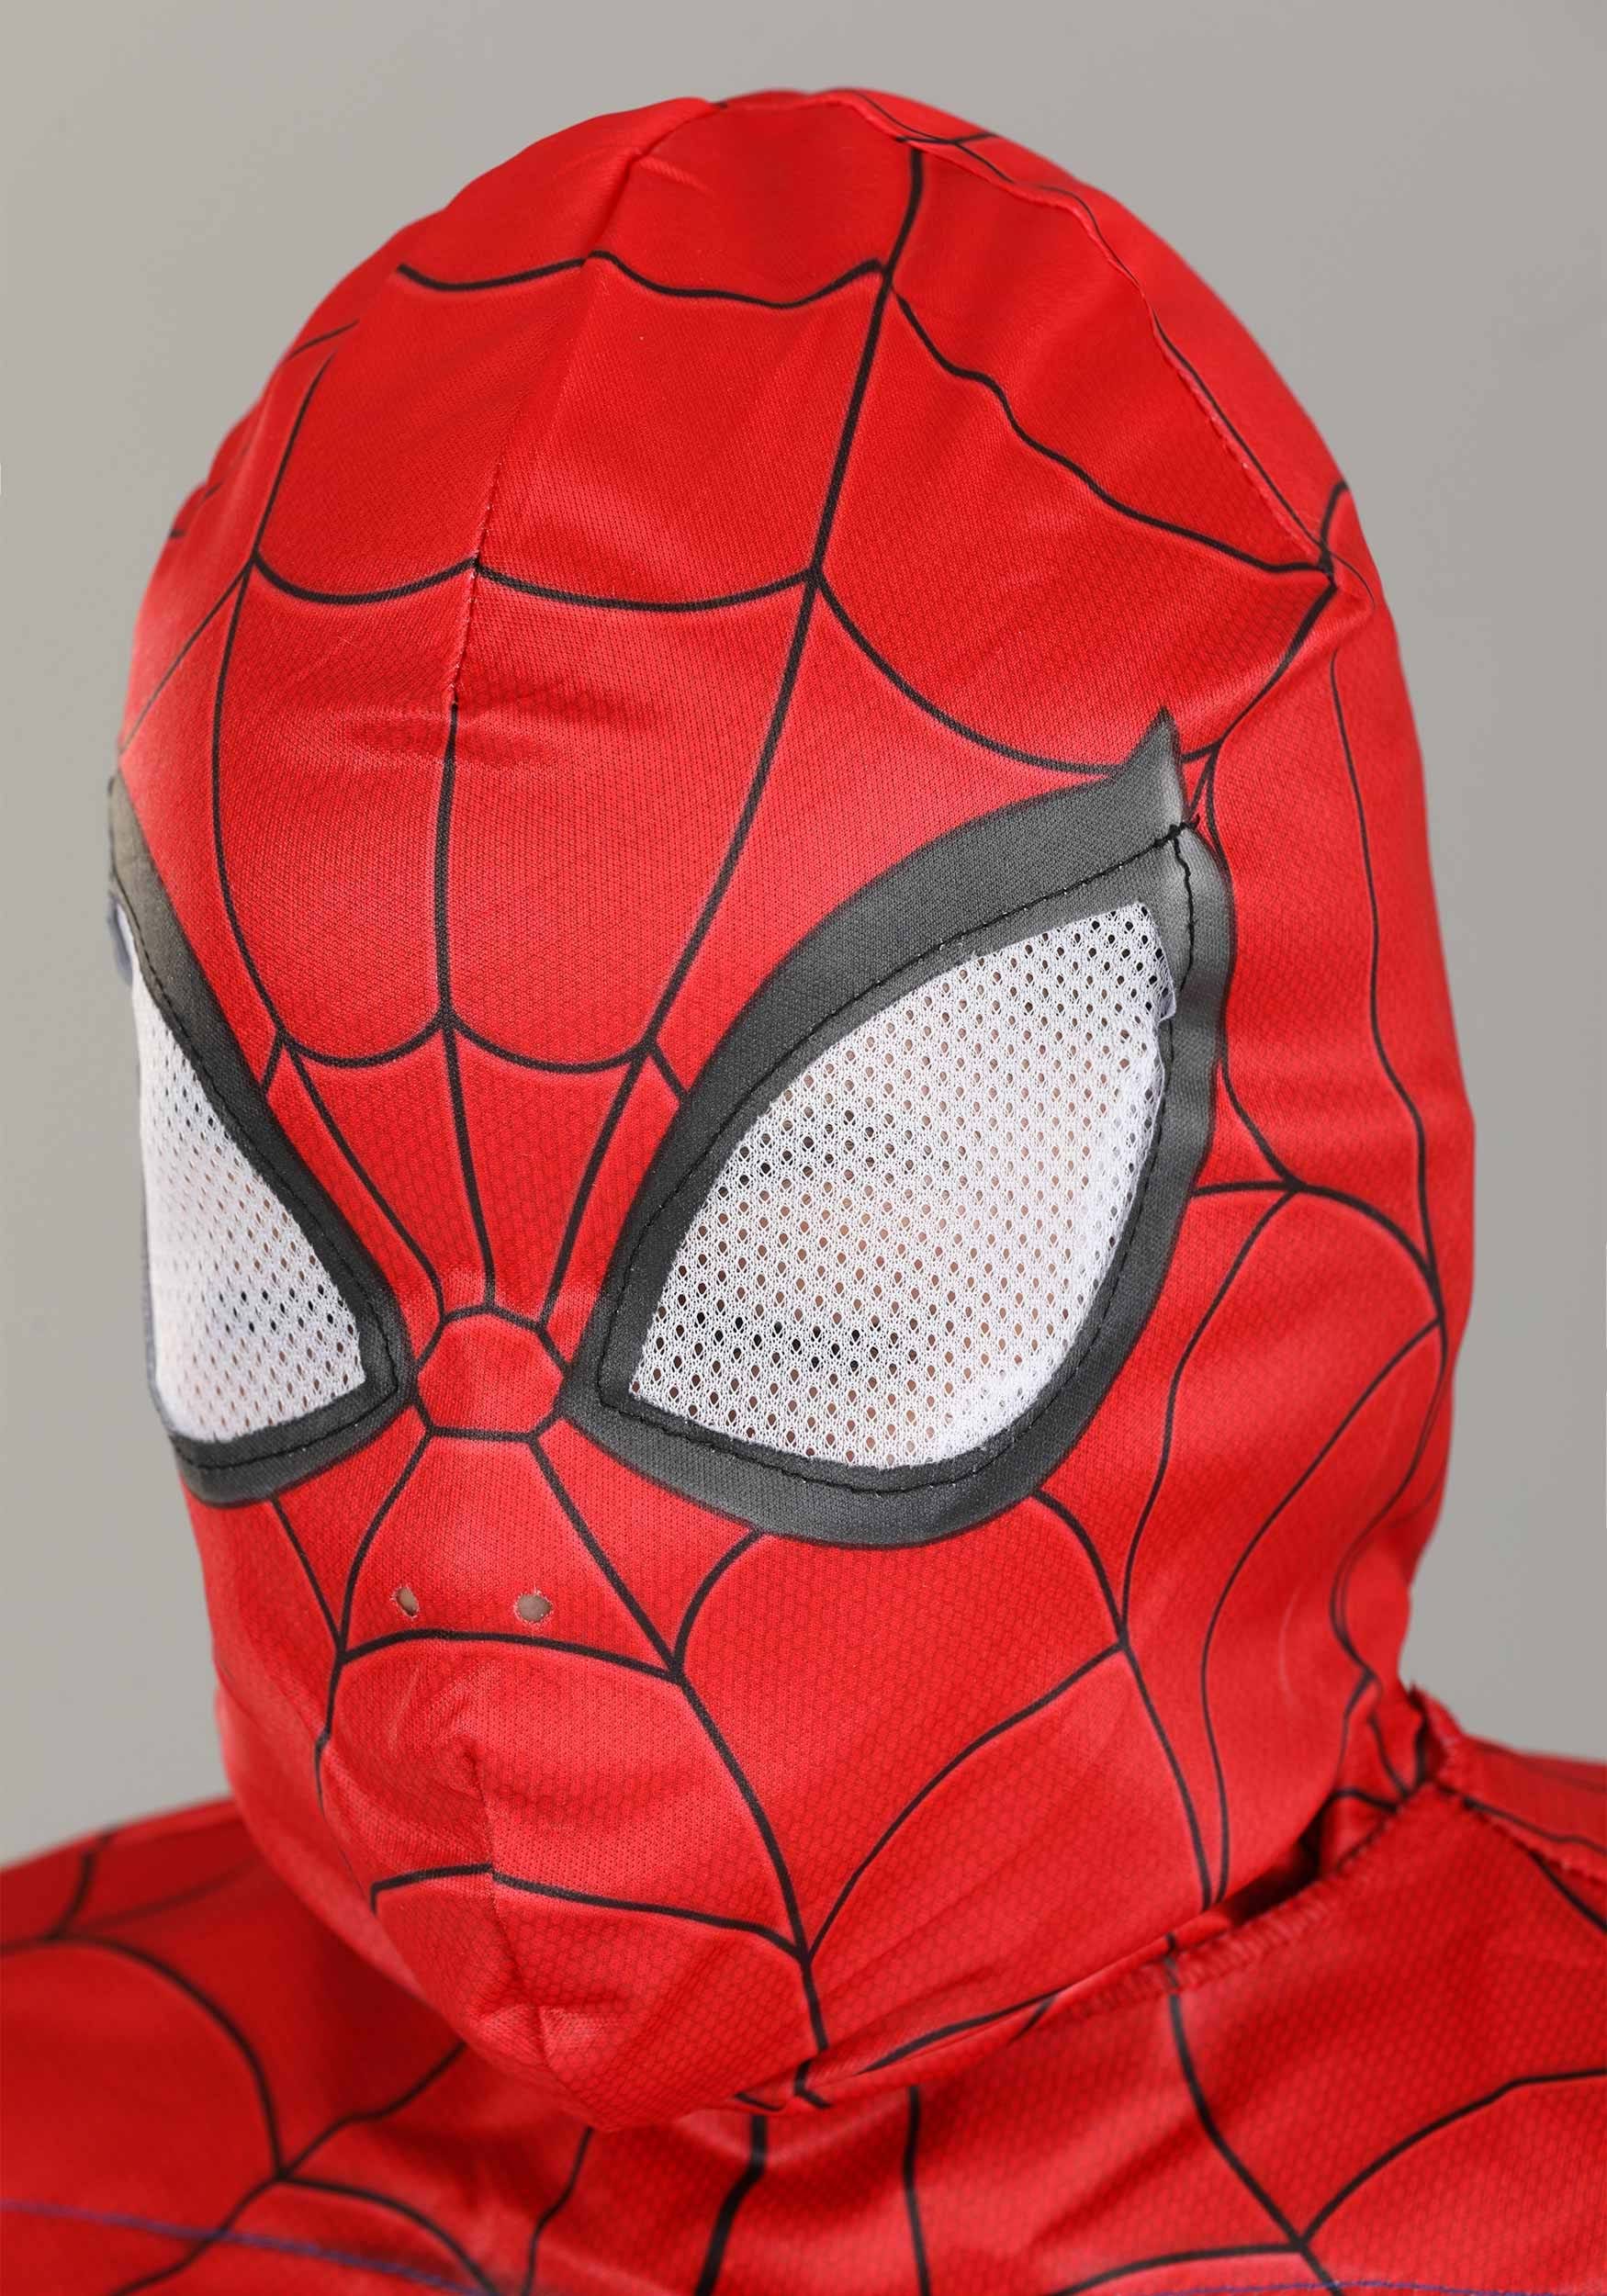 Spider-Man Fabric Kid's Mask